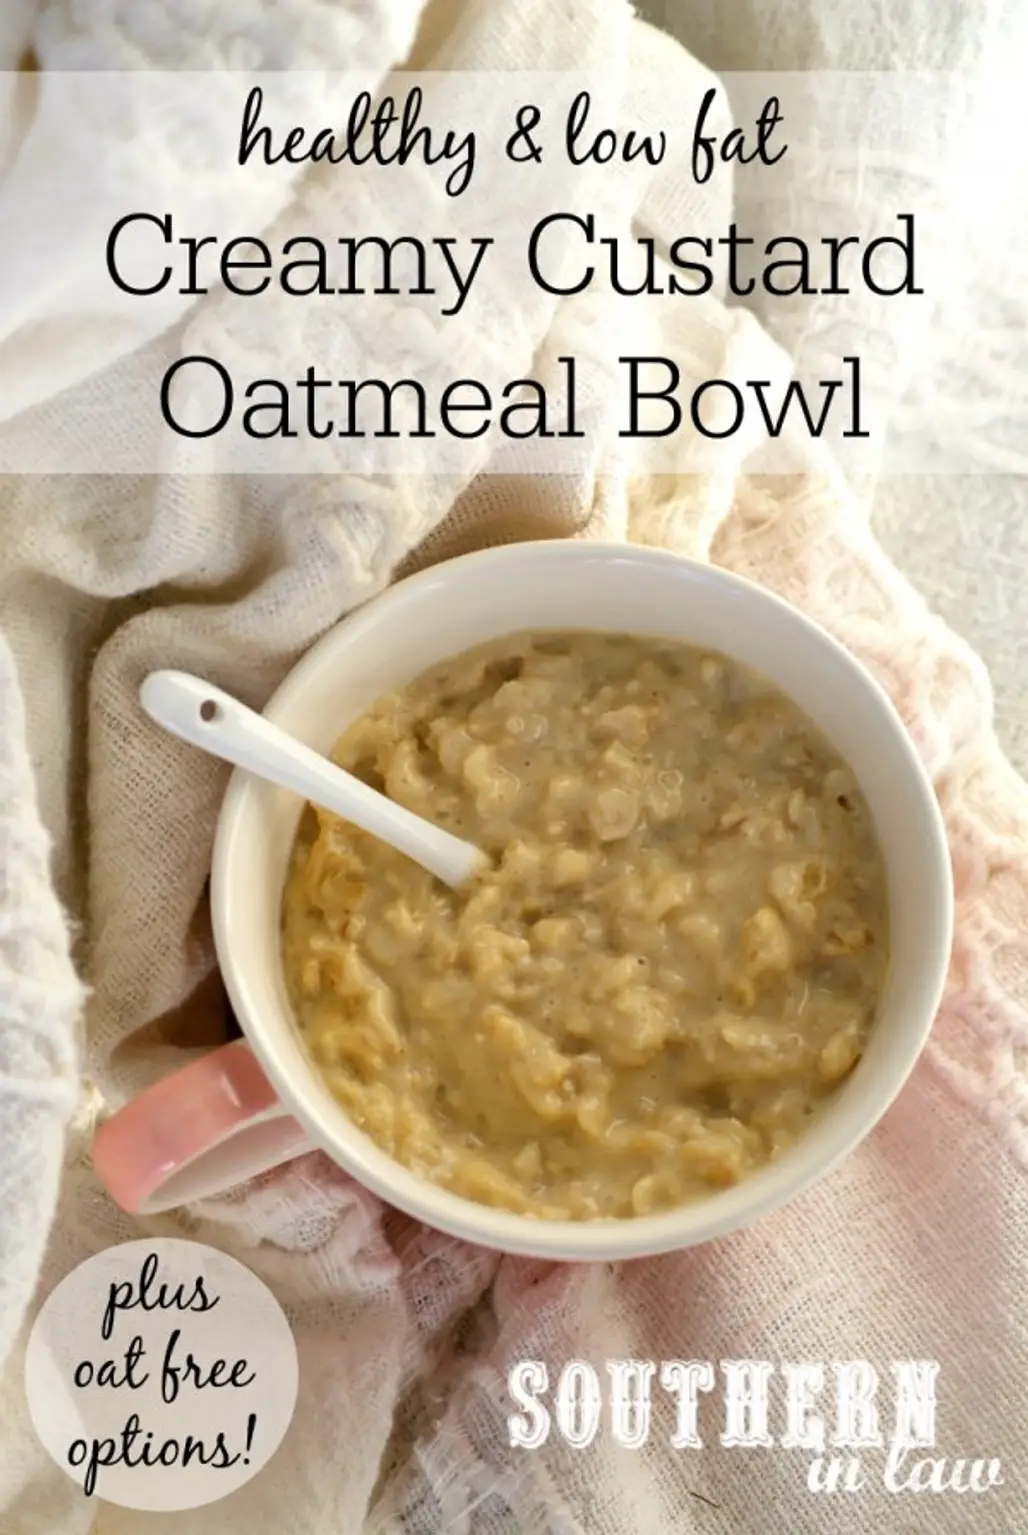 Creamy Custard Oatmeal Bowl